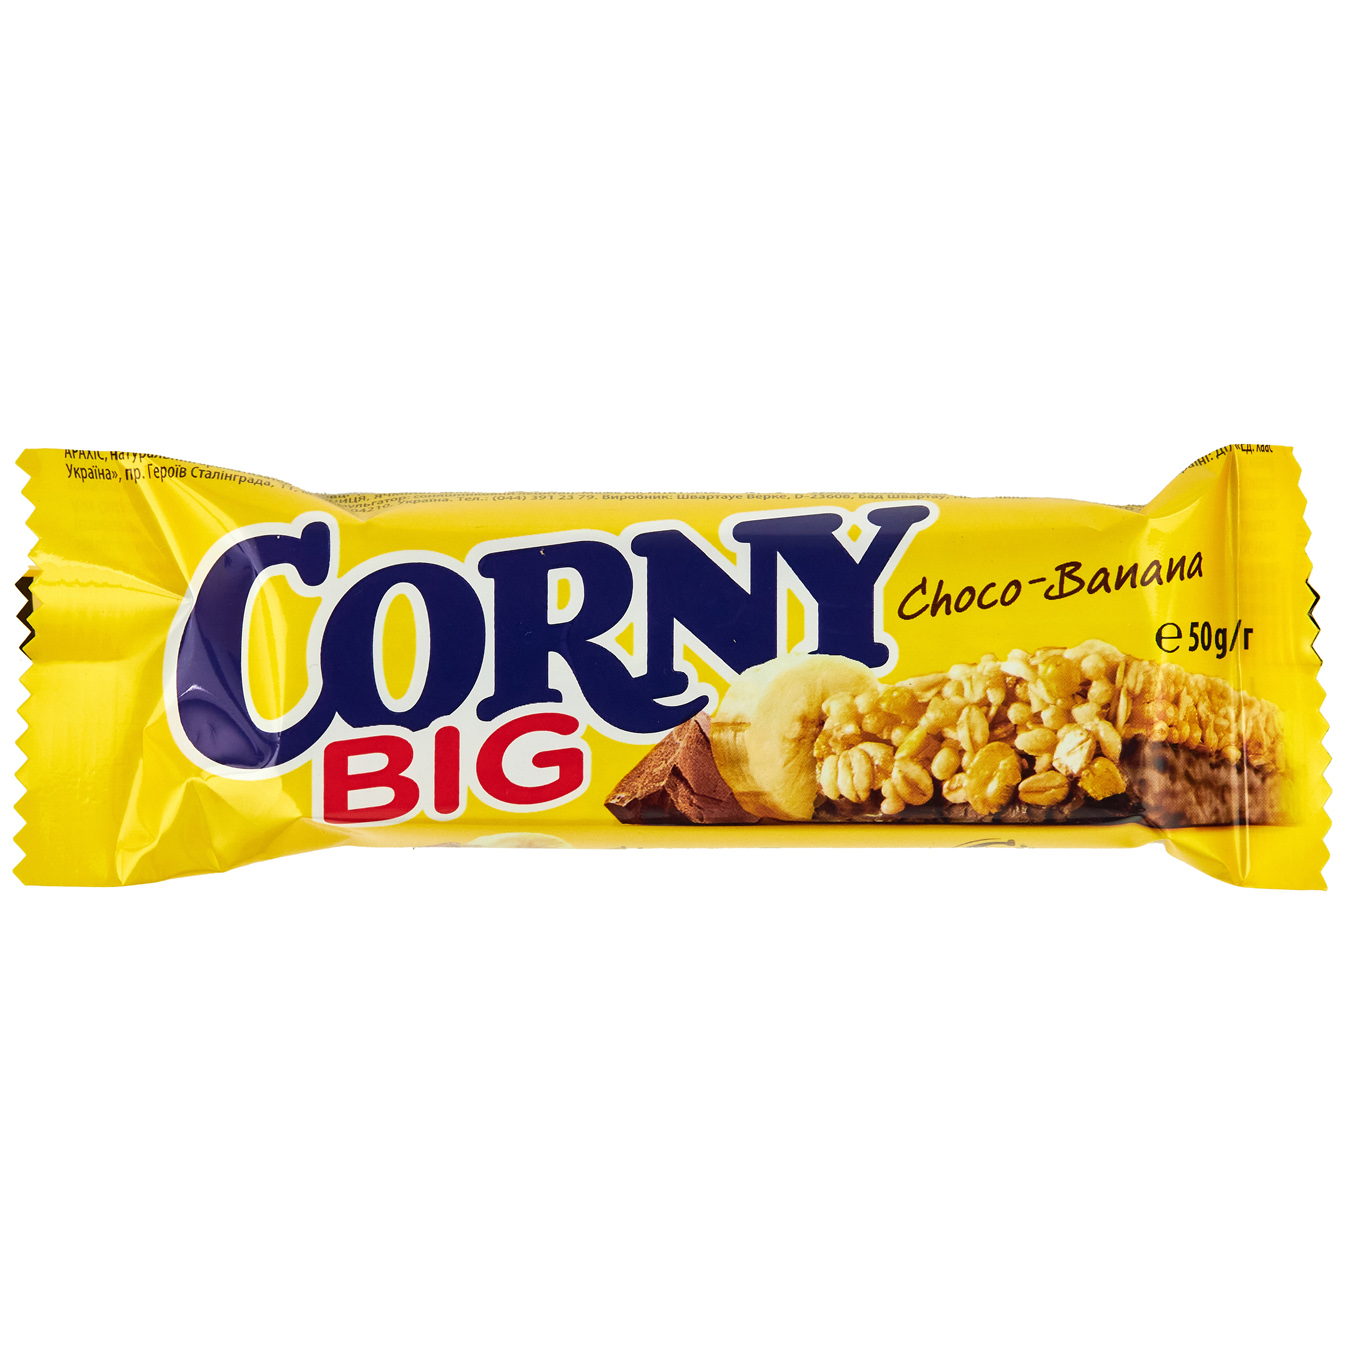 Corny Big cereal bar with milk chocolate and banana 50g*24